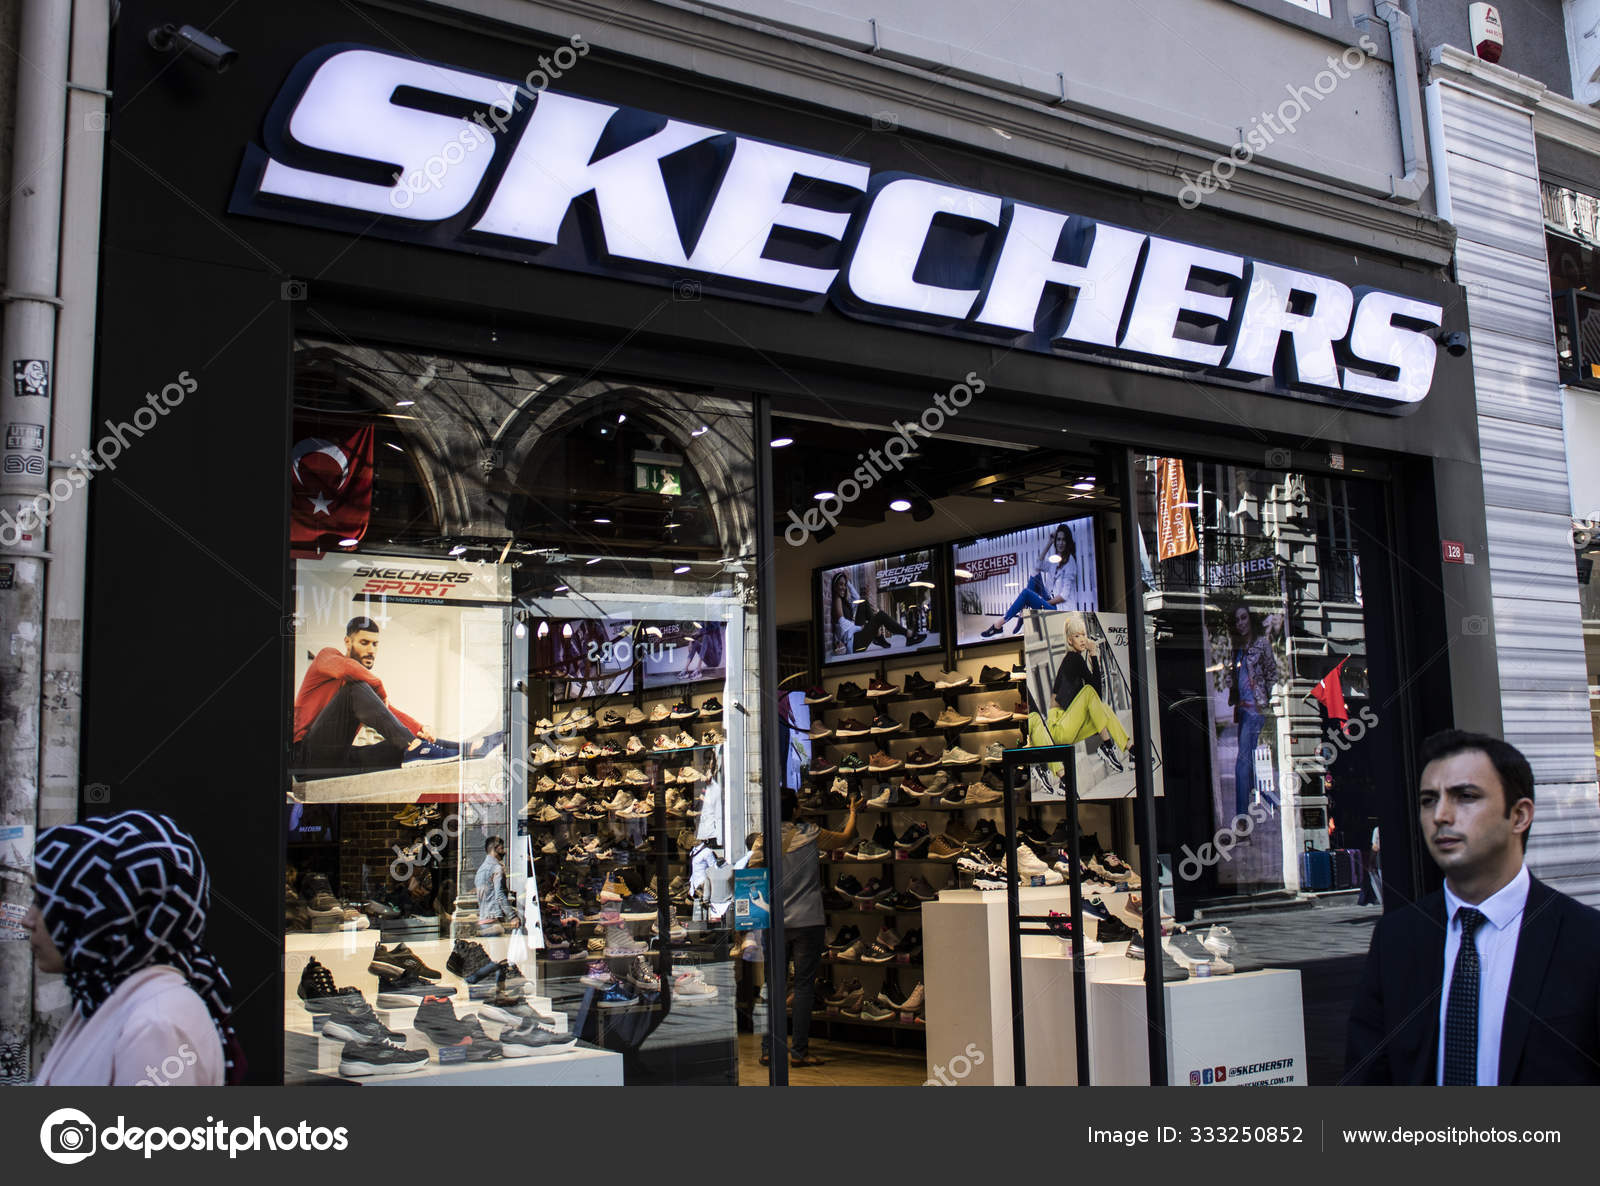 Skechers Stock Photos, Free Skechers Images | Depositphotos